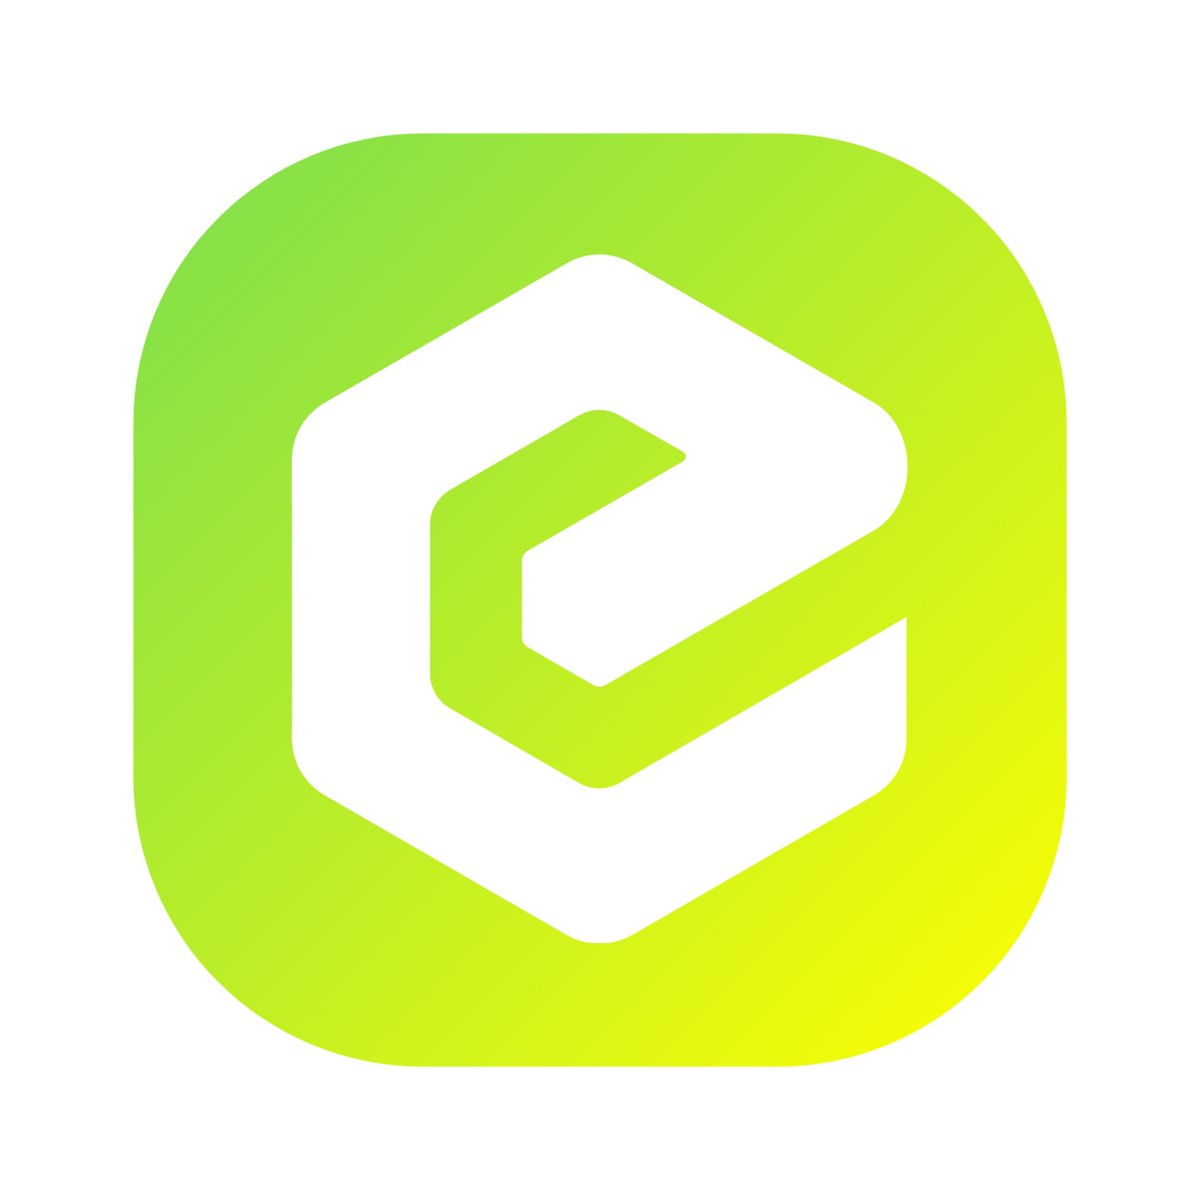 eCash Logo Lime